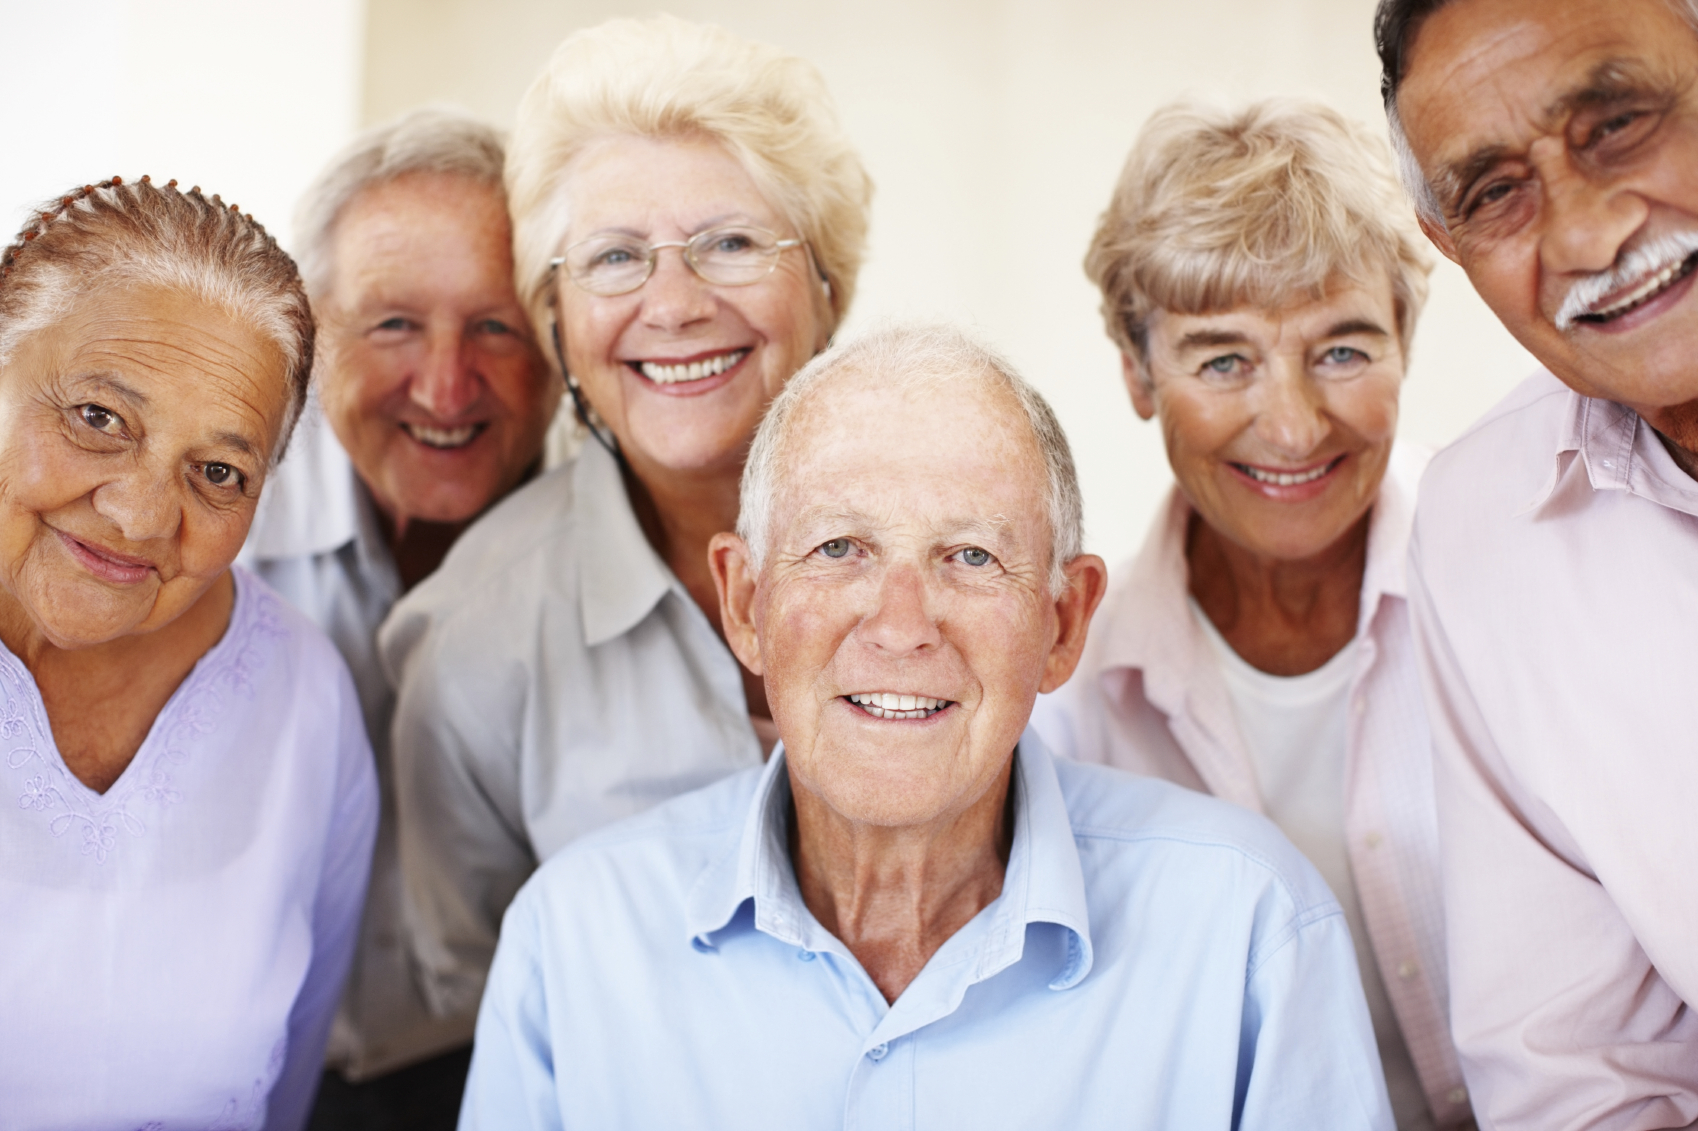 Group of six joyful elderly friends smiling together